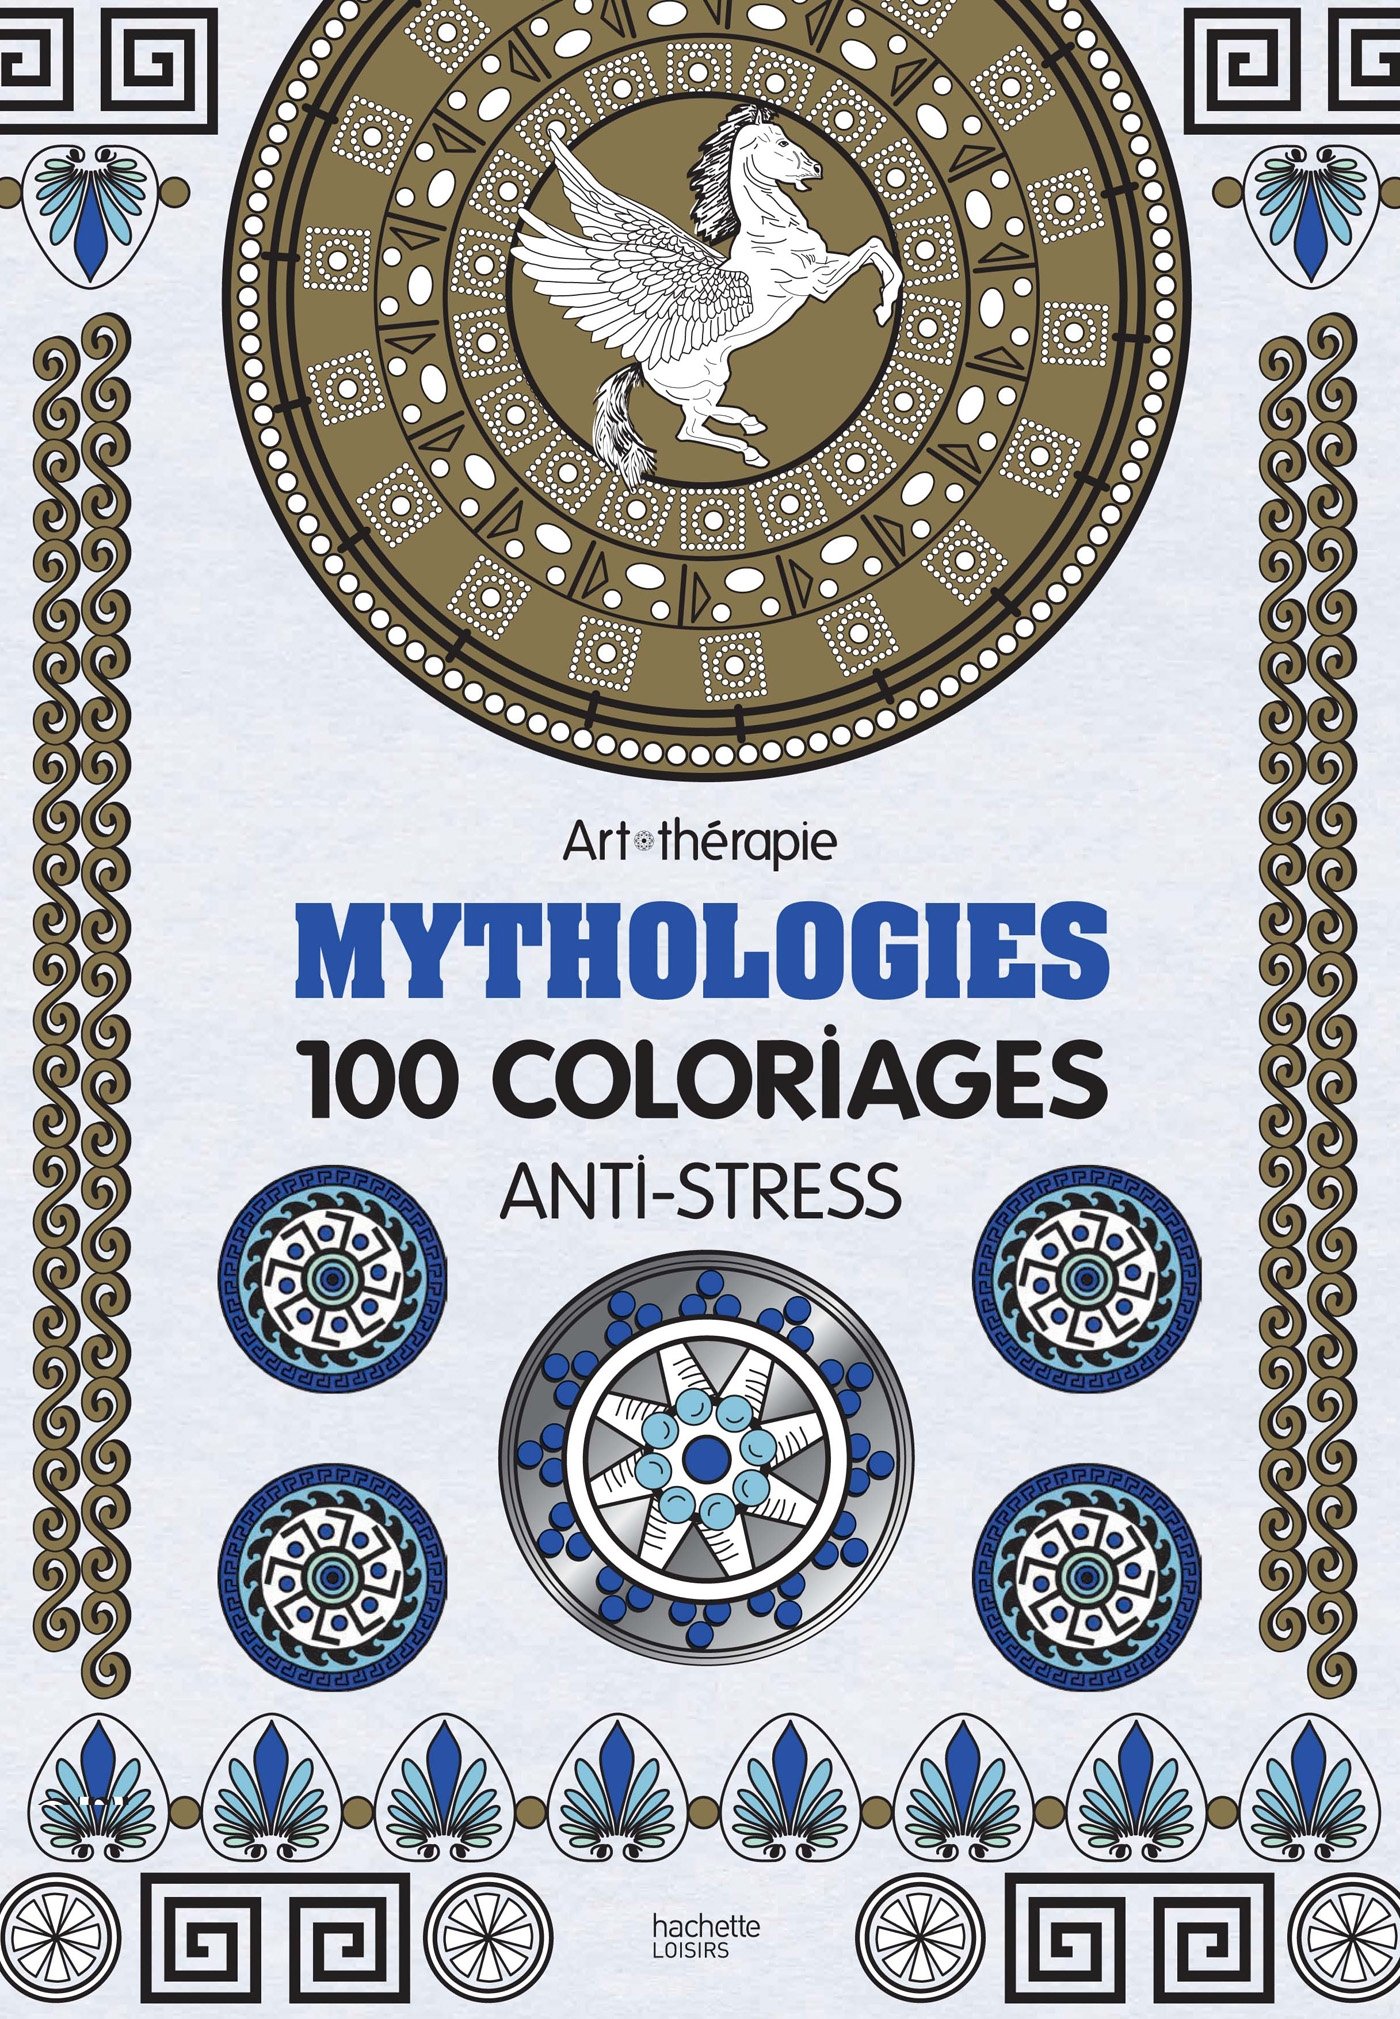 Mythologies 100 coloriages anti stress